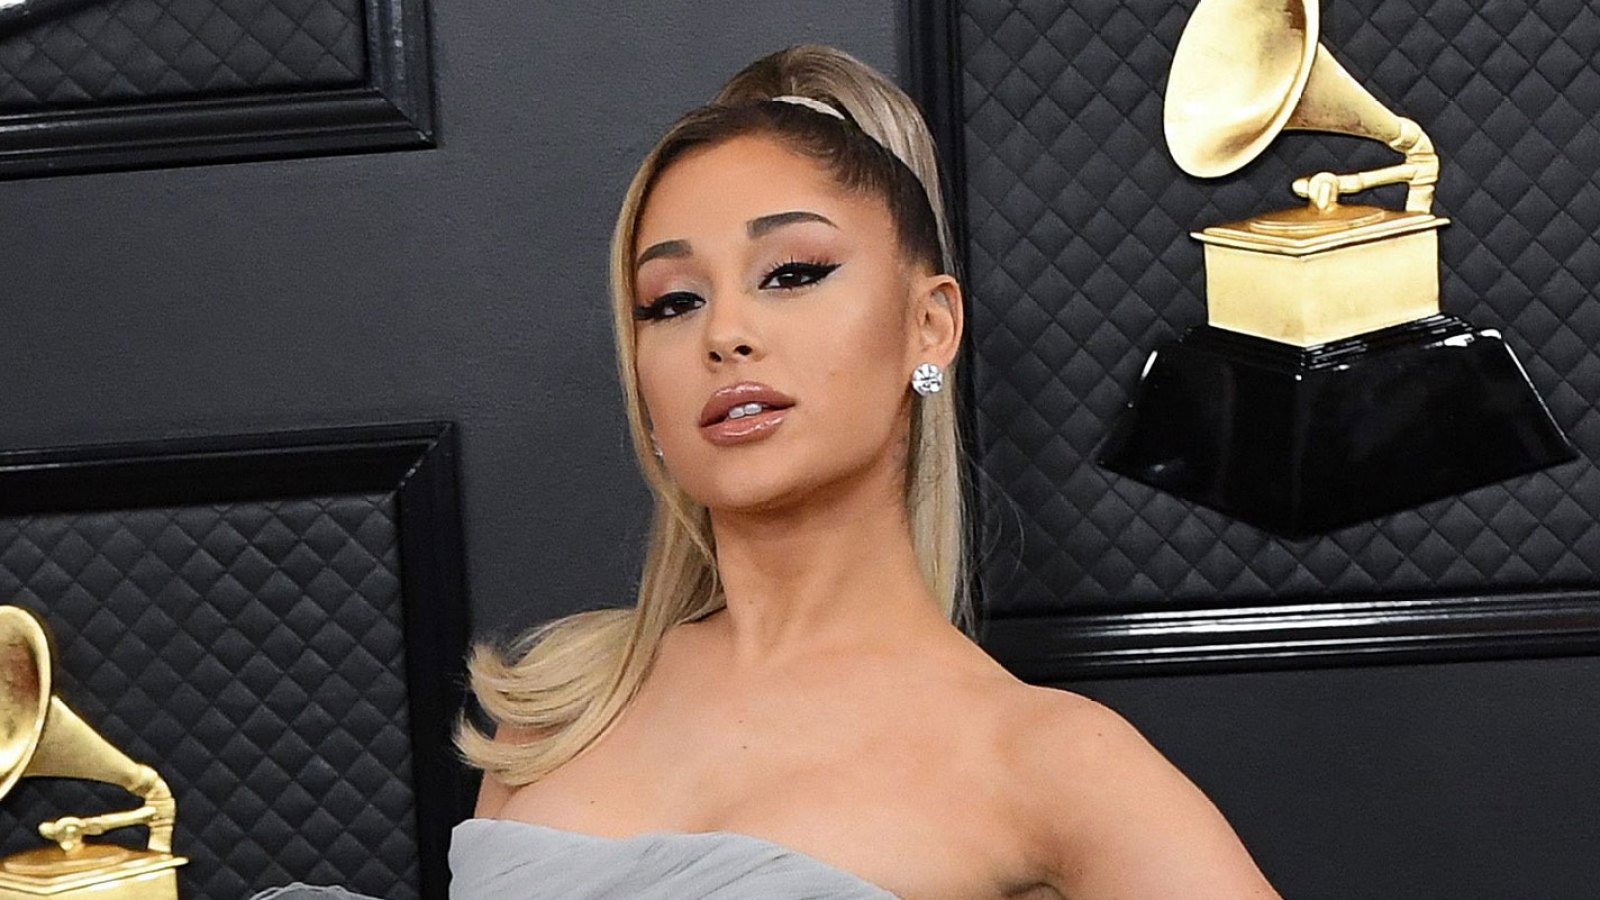 Ariana Grande Snuff Porn - Grammys 2022: Ariana Grande Skips Awards Show Amid 3 Nominations